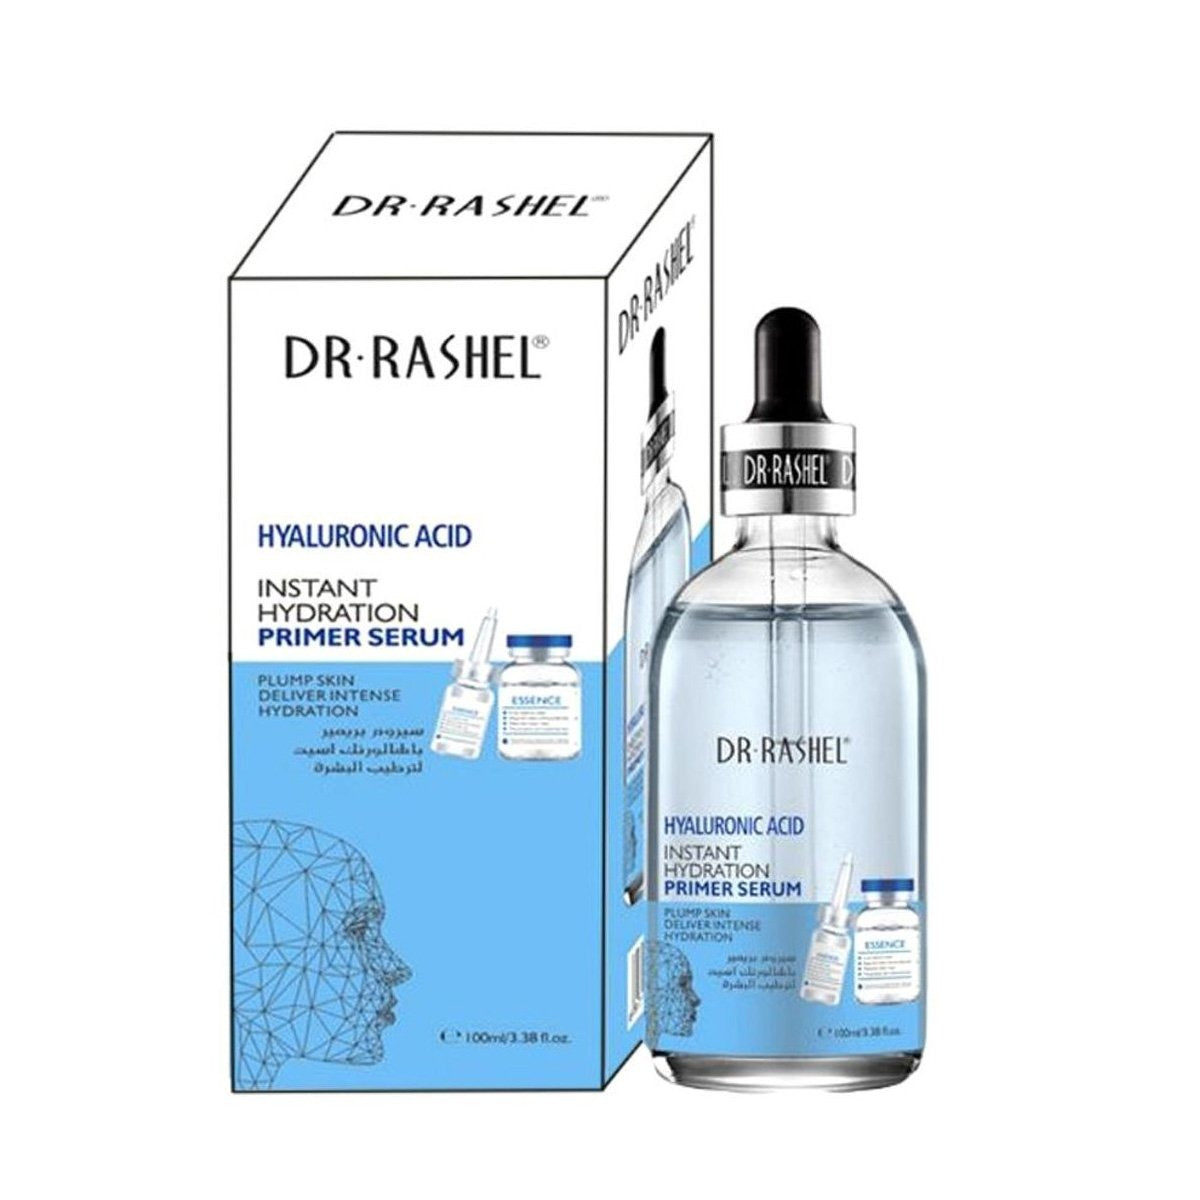 Dr Rashel Hyaluronic Acid Instant Hydration Primer Serum 100ml DRL-1494 freeshipping - lasertag.pk